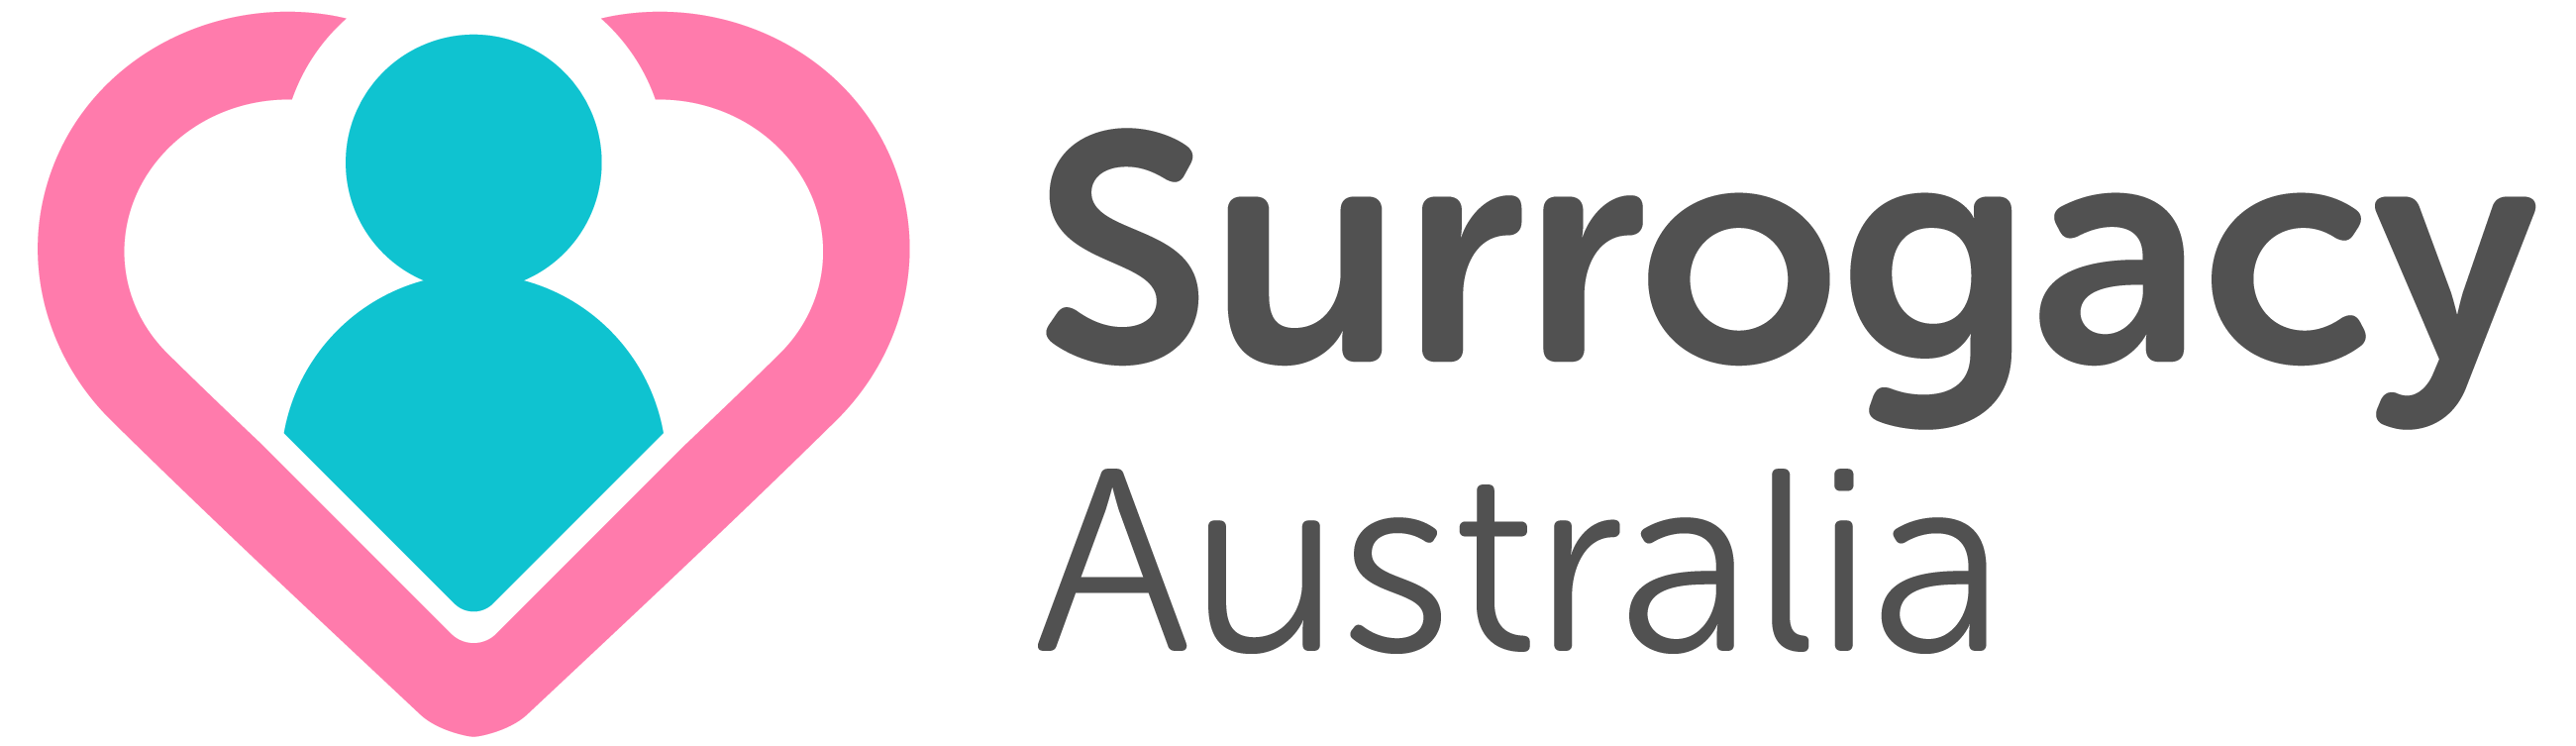 Surrogacy Australia logo